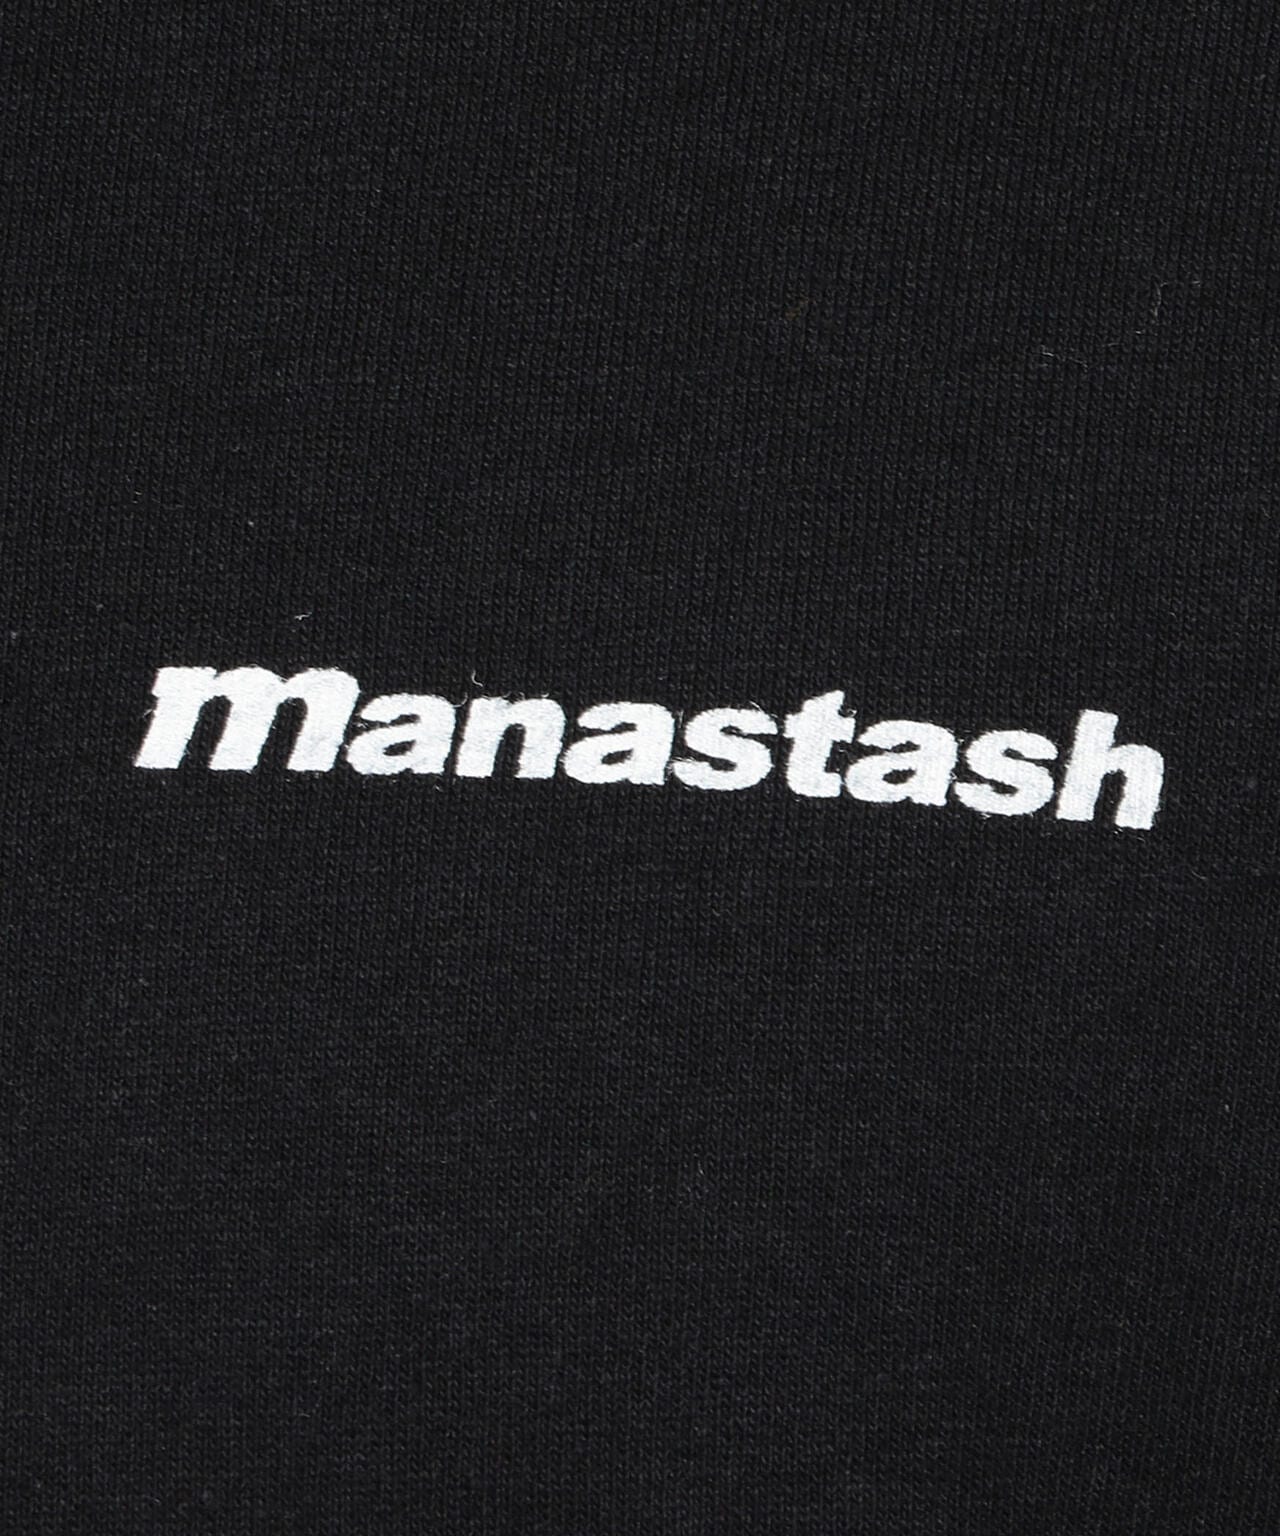 MANASTASH/マナスタッシュ/90s SleeveLogo L/S T-Shrits/袖ロゴロングスリーブTシャツ